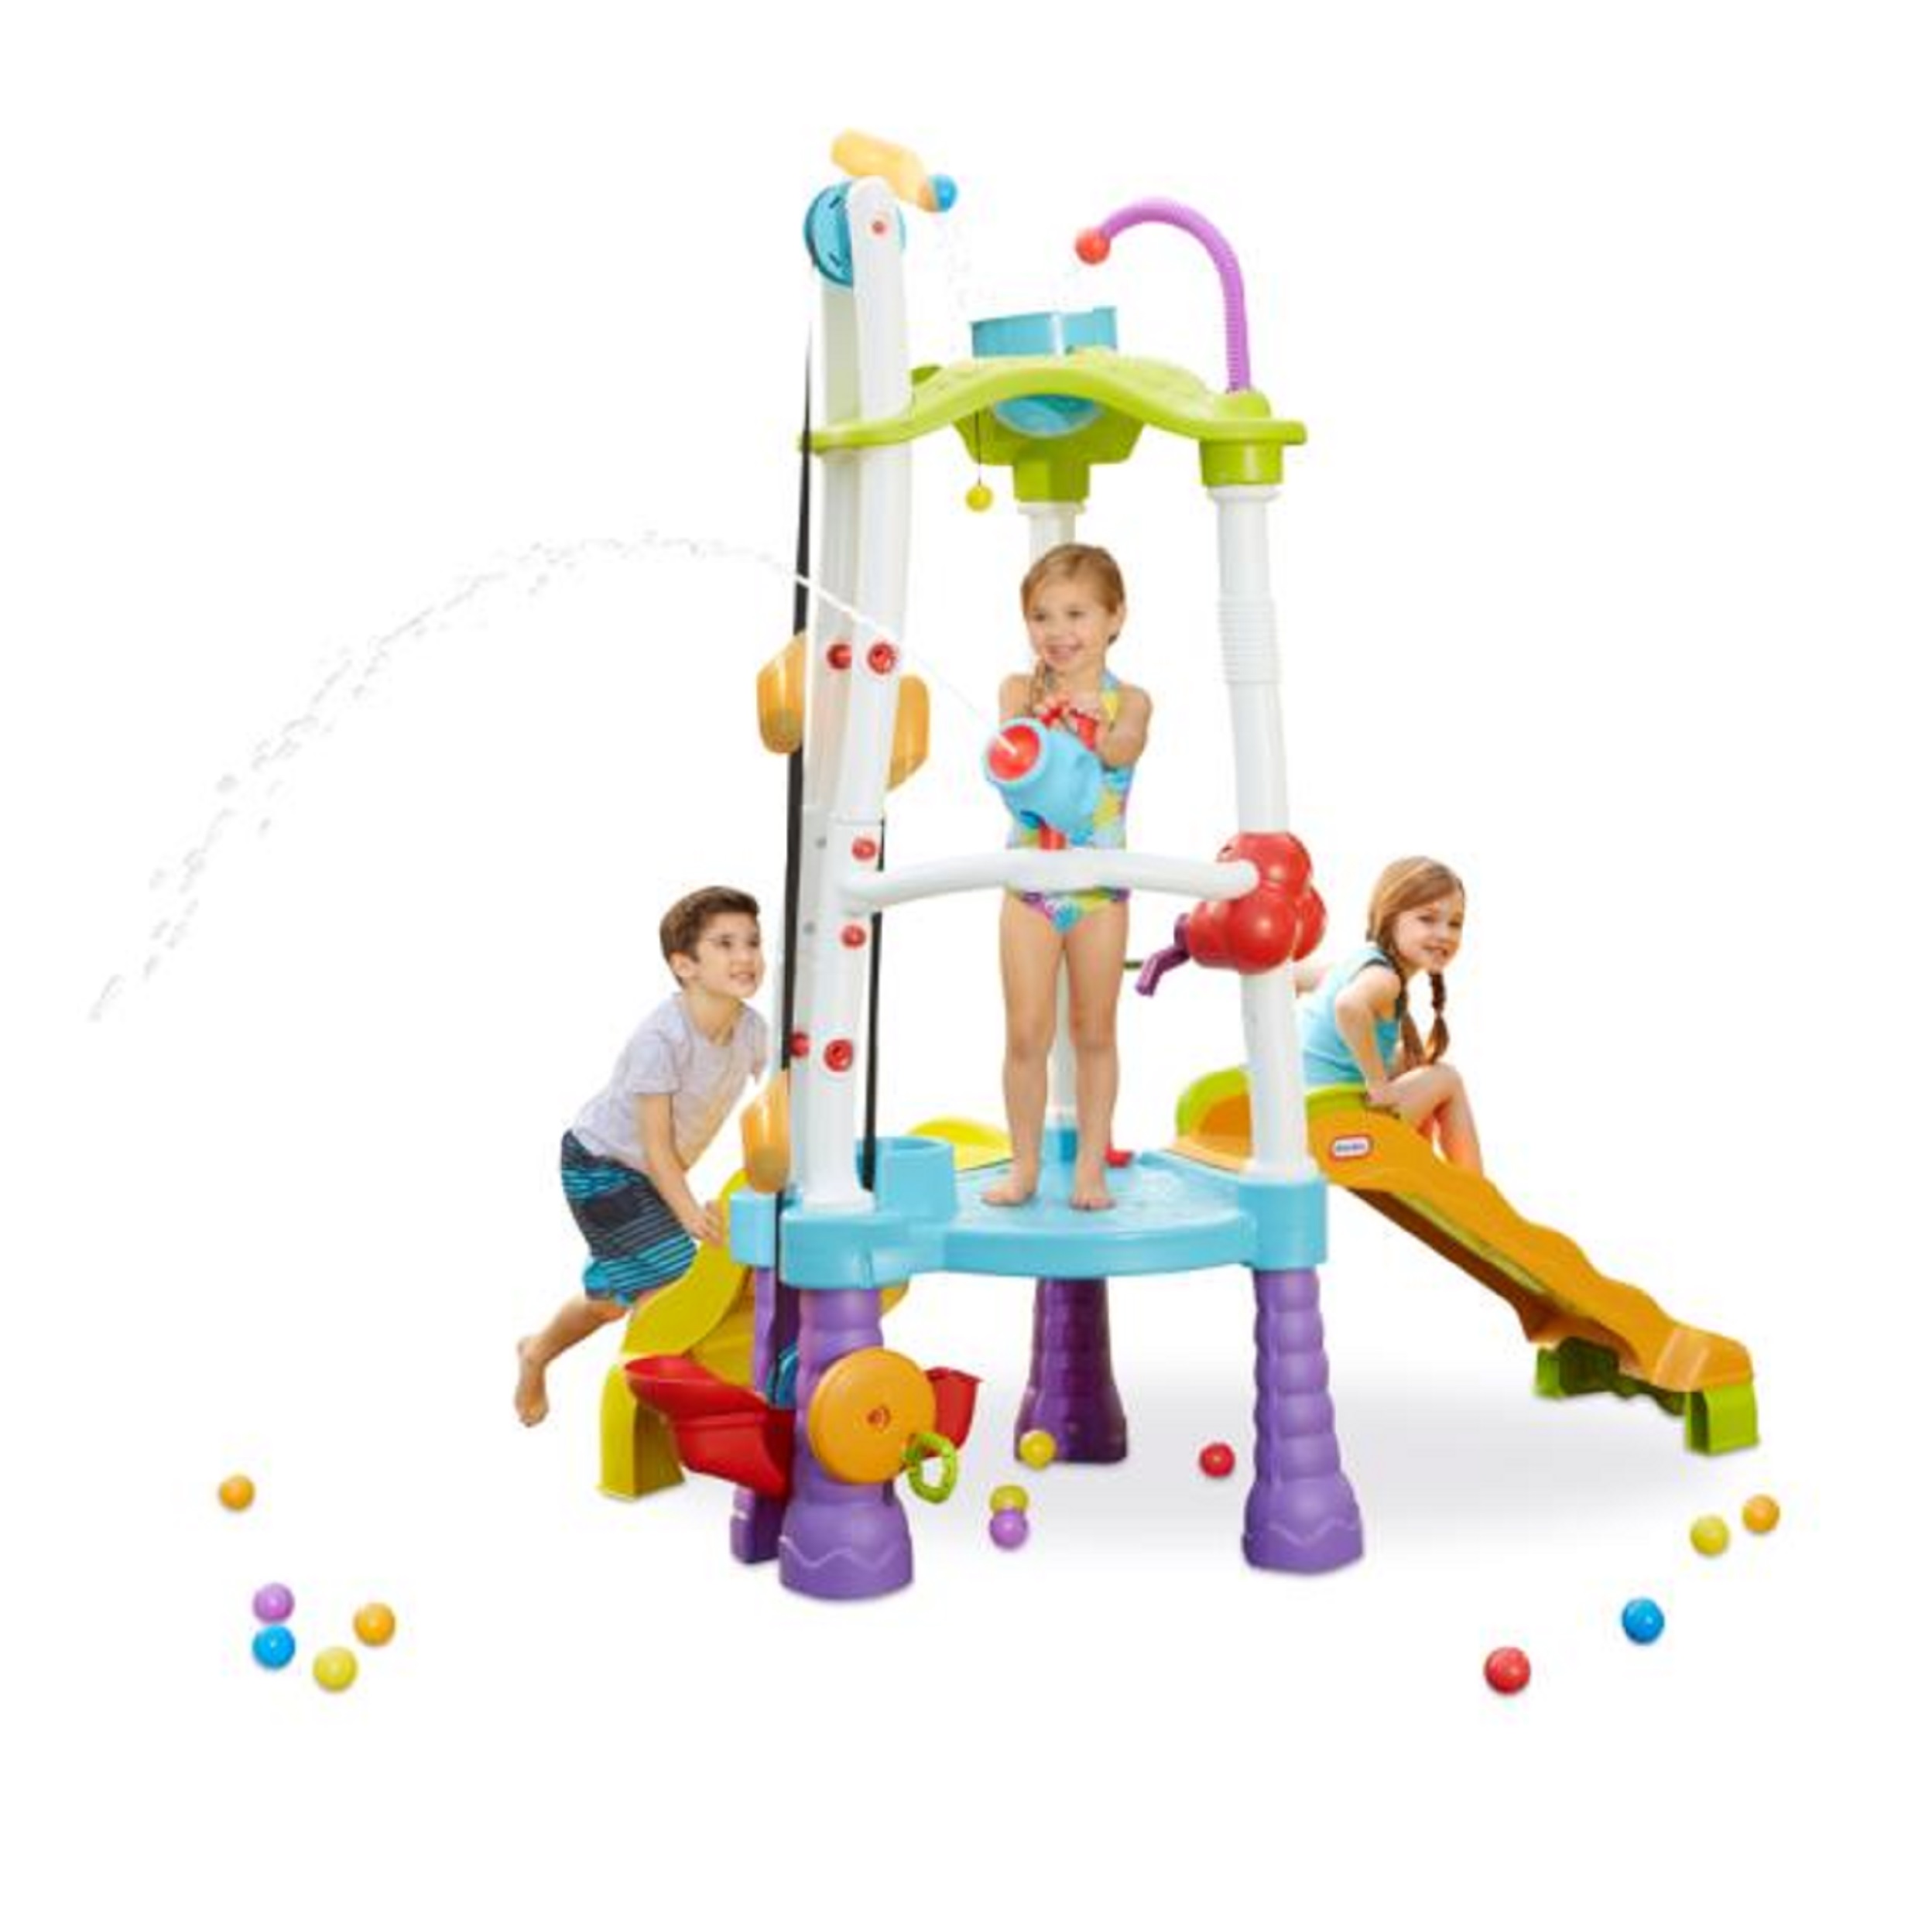 Little Tikes Fun Zone Kids Tumblin’ Indoor/Outdoor Tower Climber